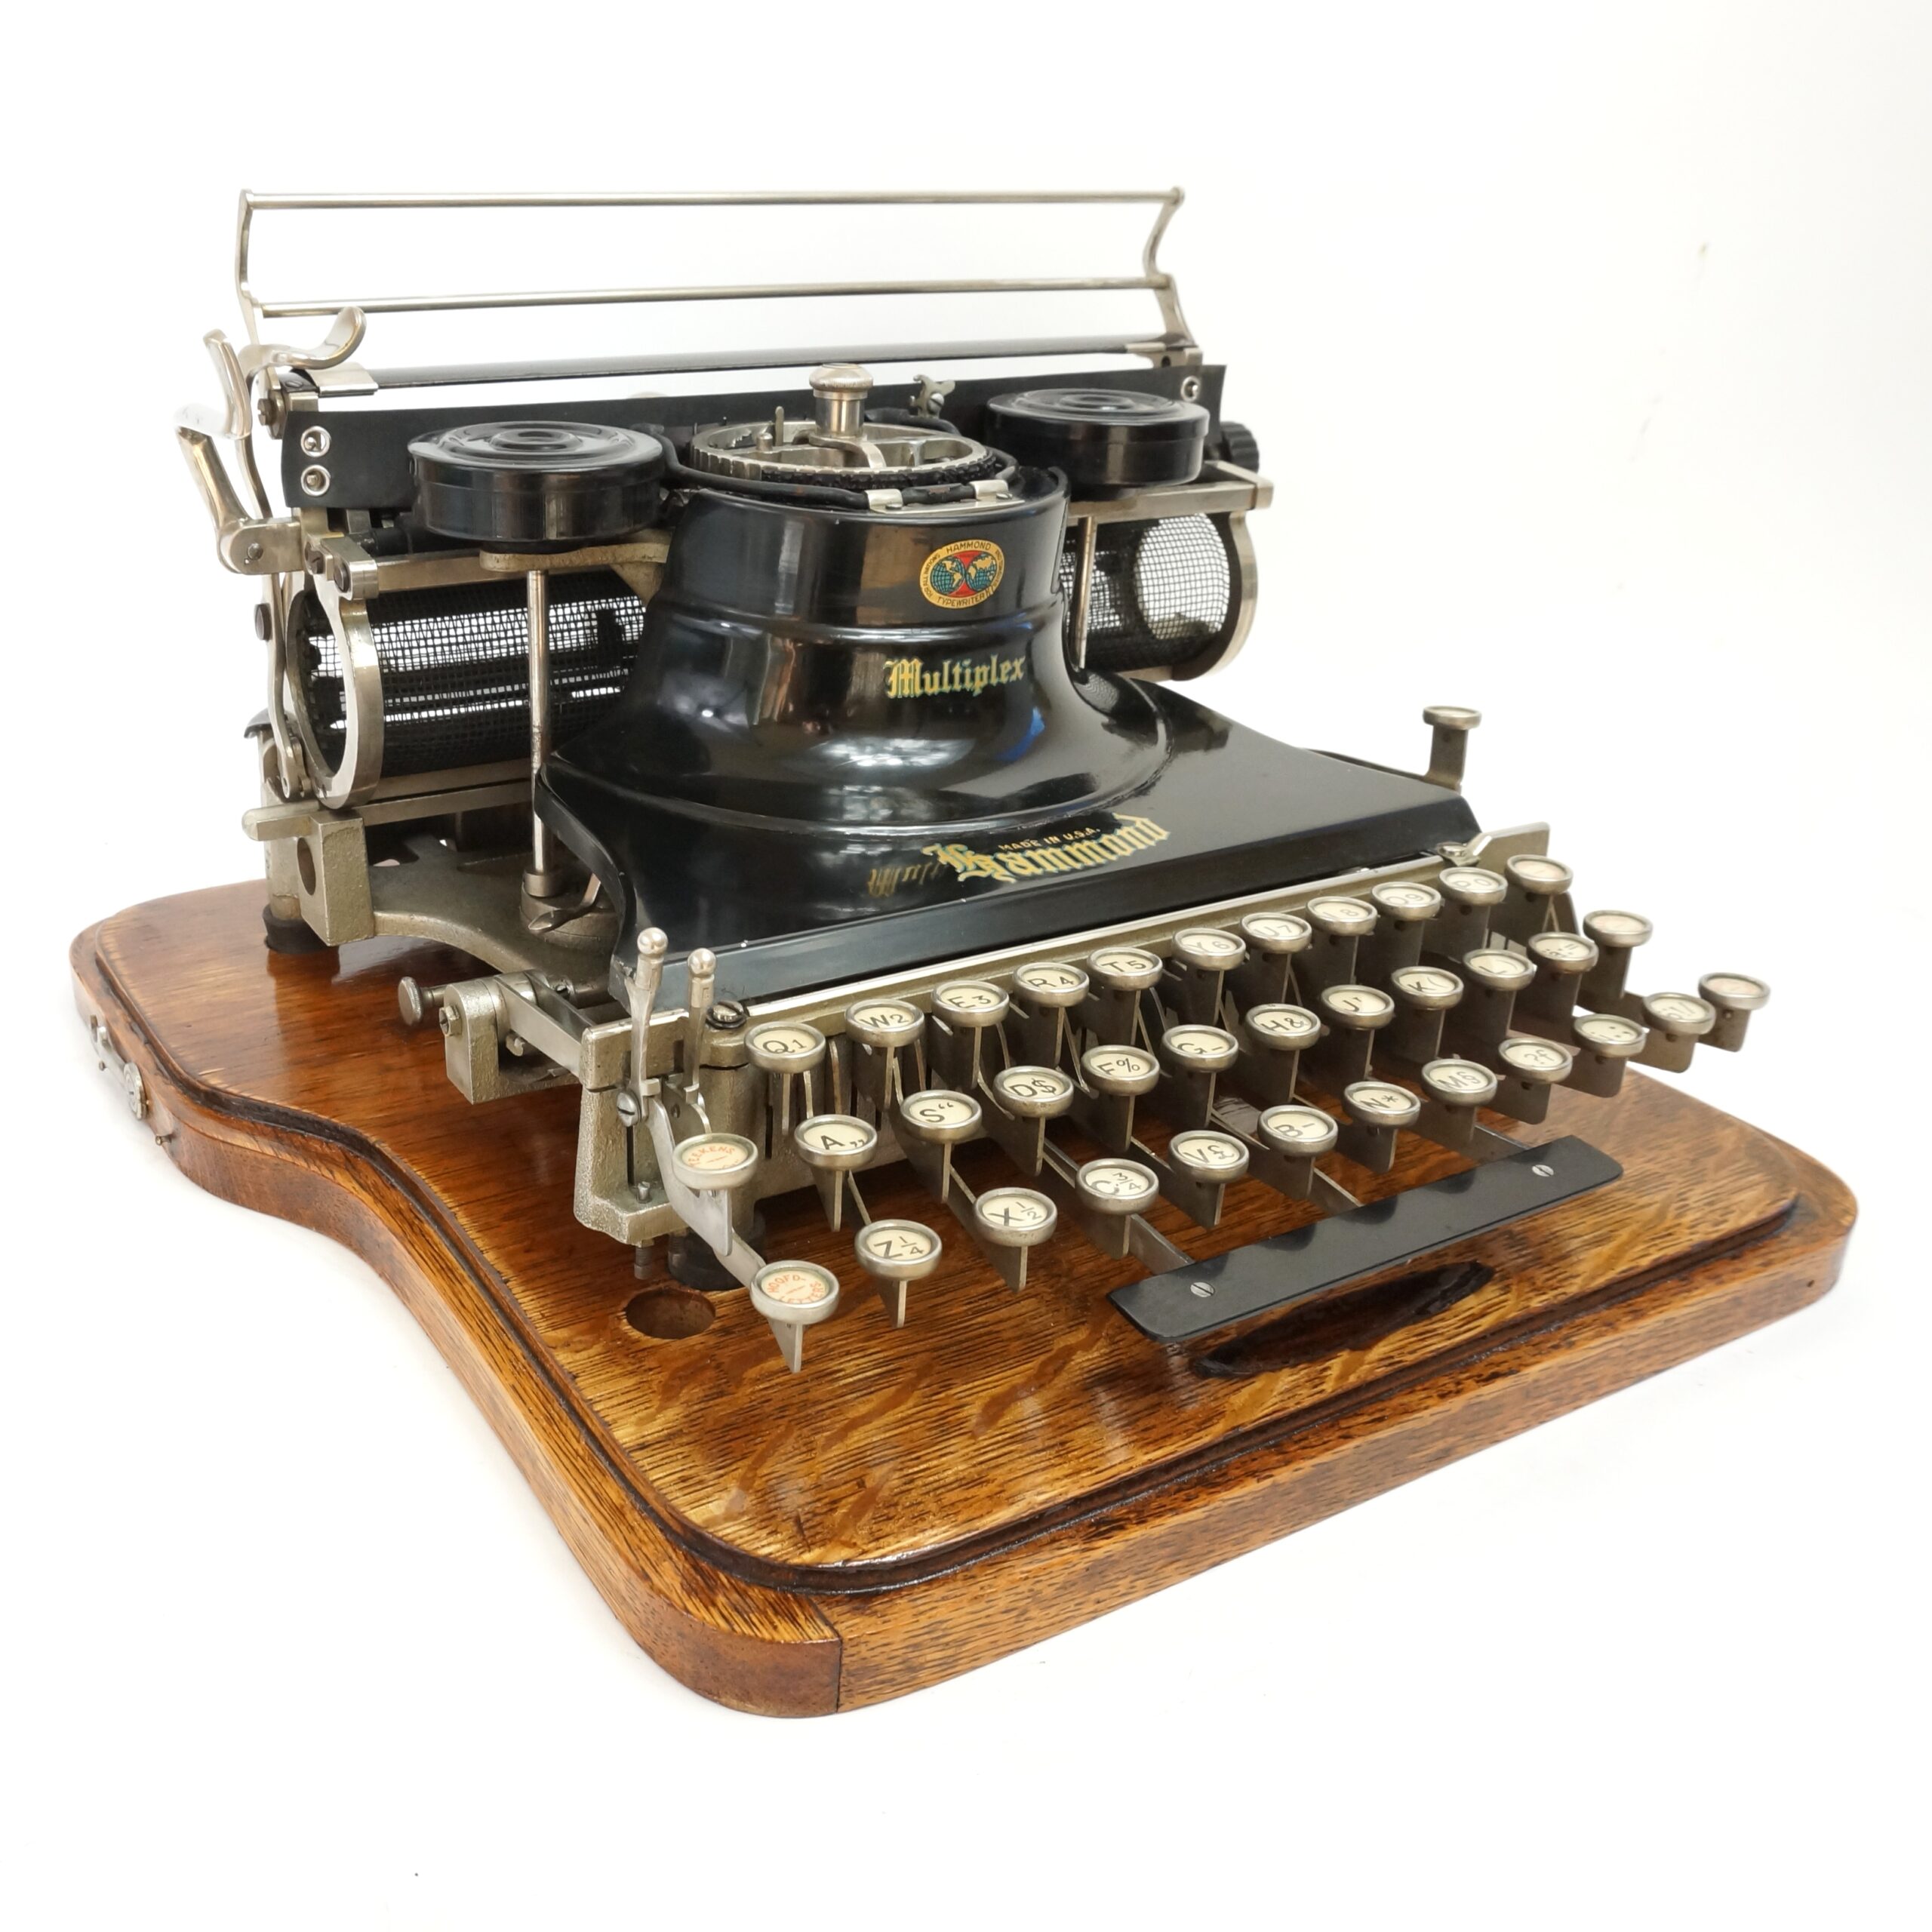 Hammond Multiplex Typewriter For Sale My Cup Of Retro Typewriters